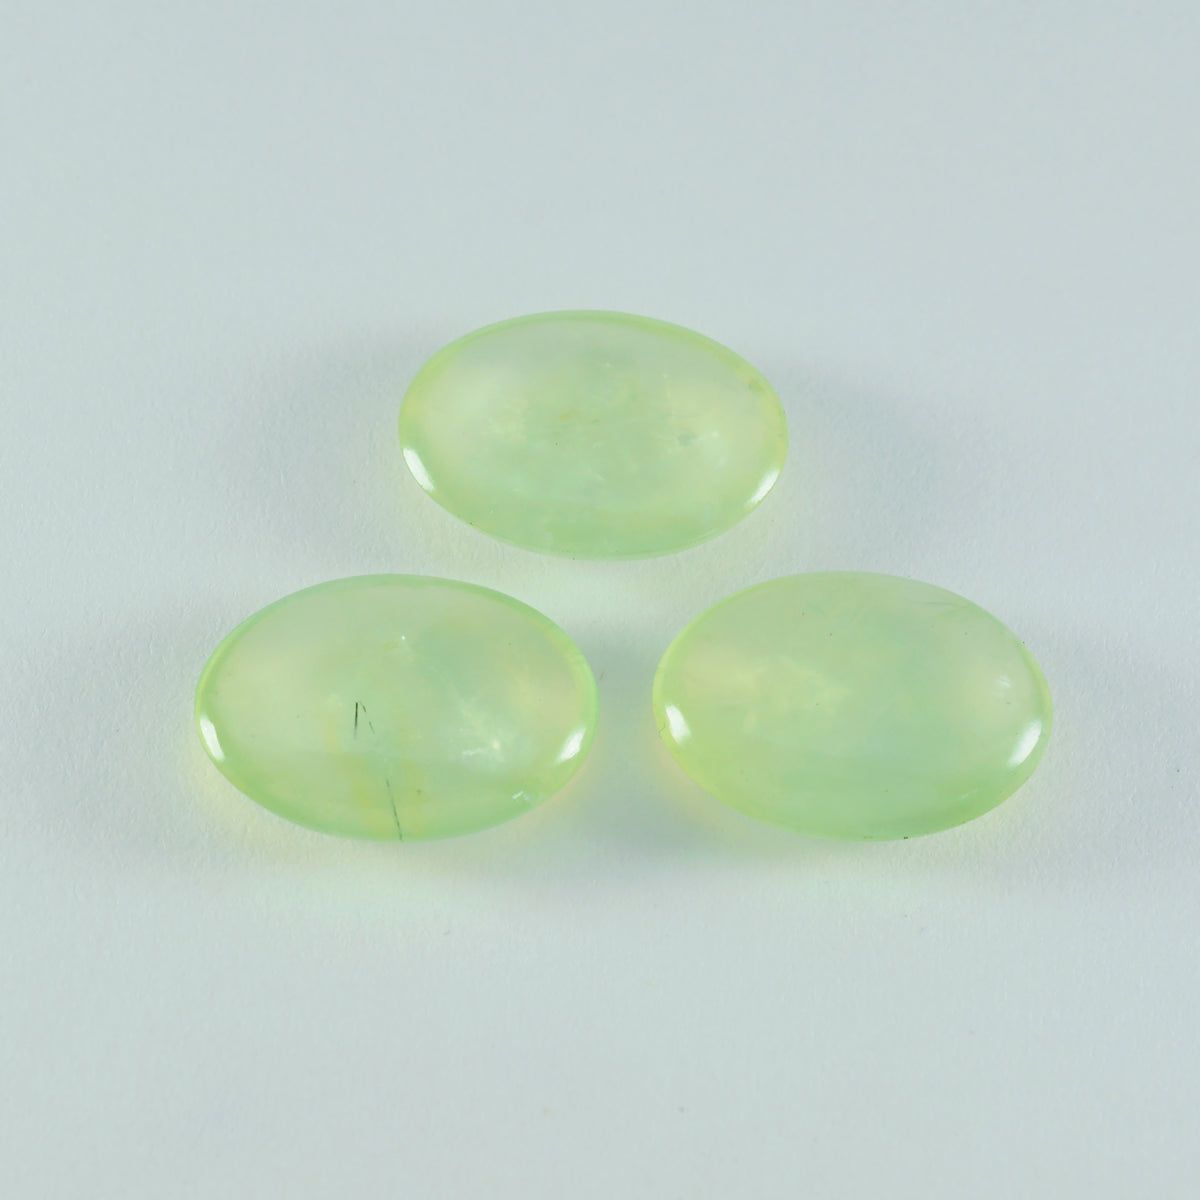 Riyogems 1PC Green Prehnite Cabochon 10x14 mm Oval Shape Nice Quality Stone